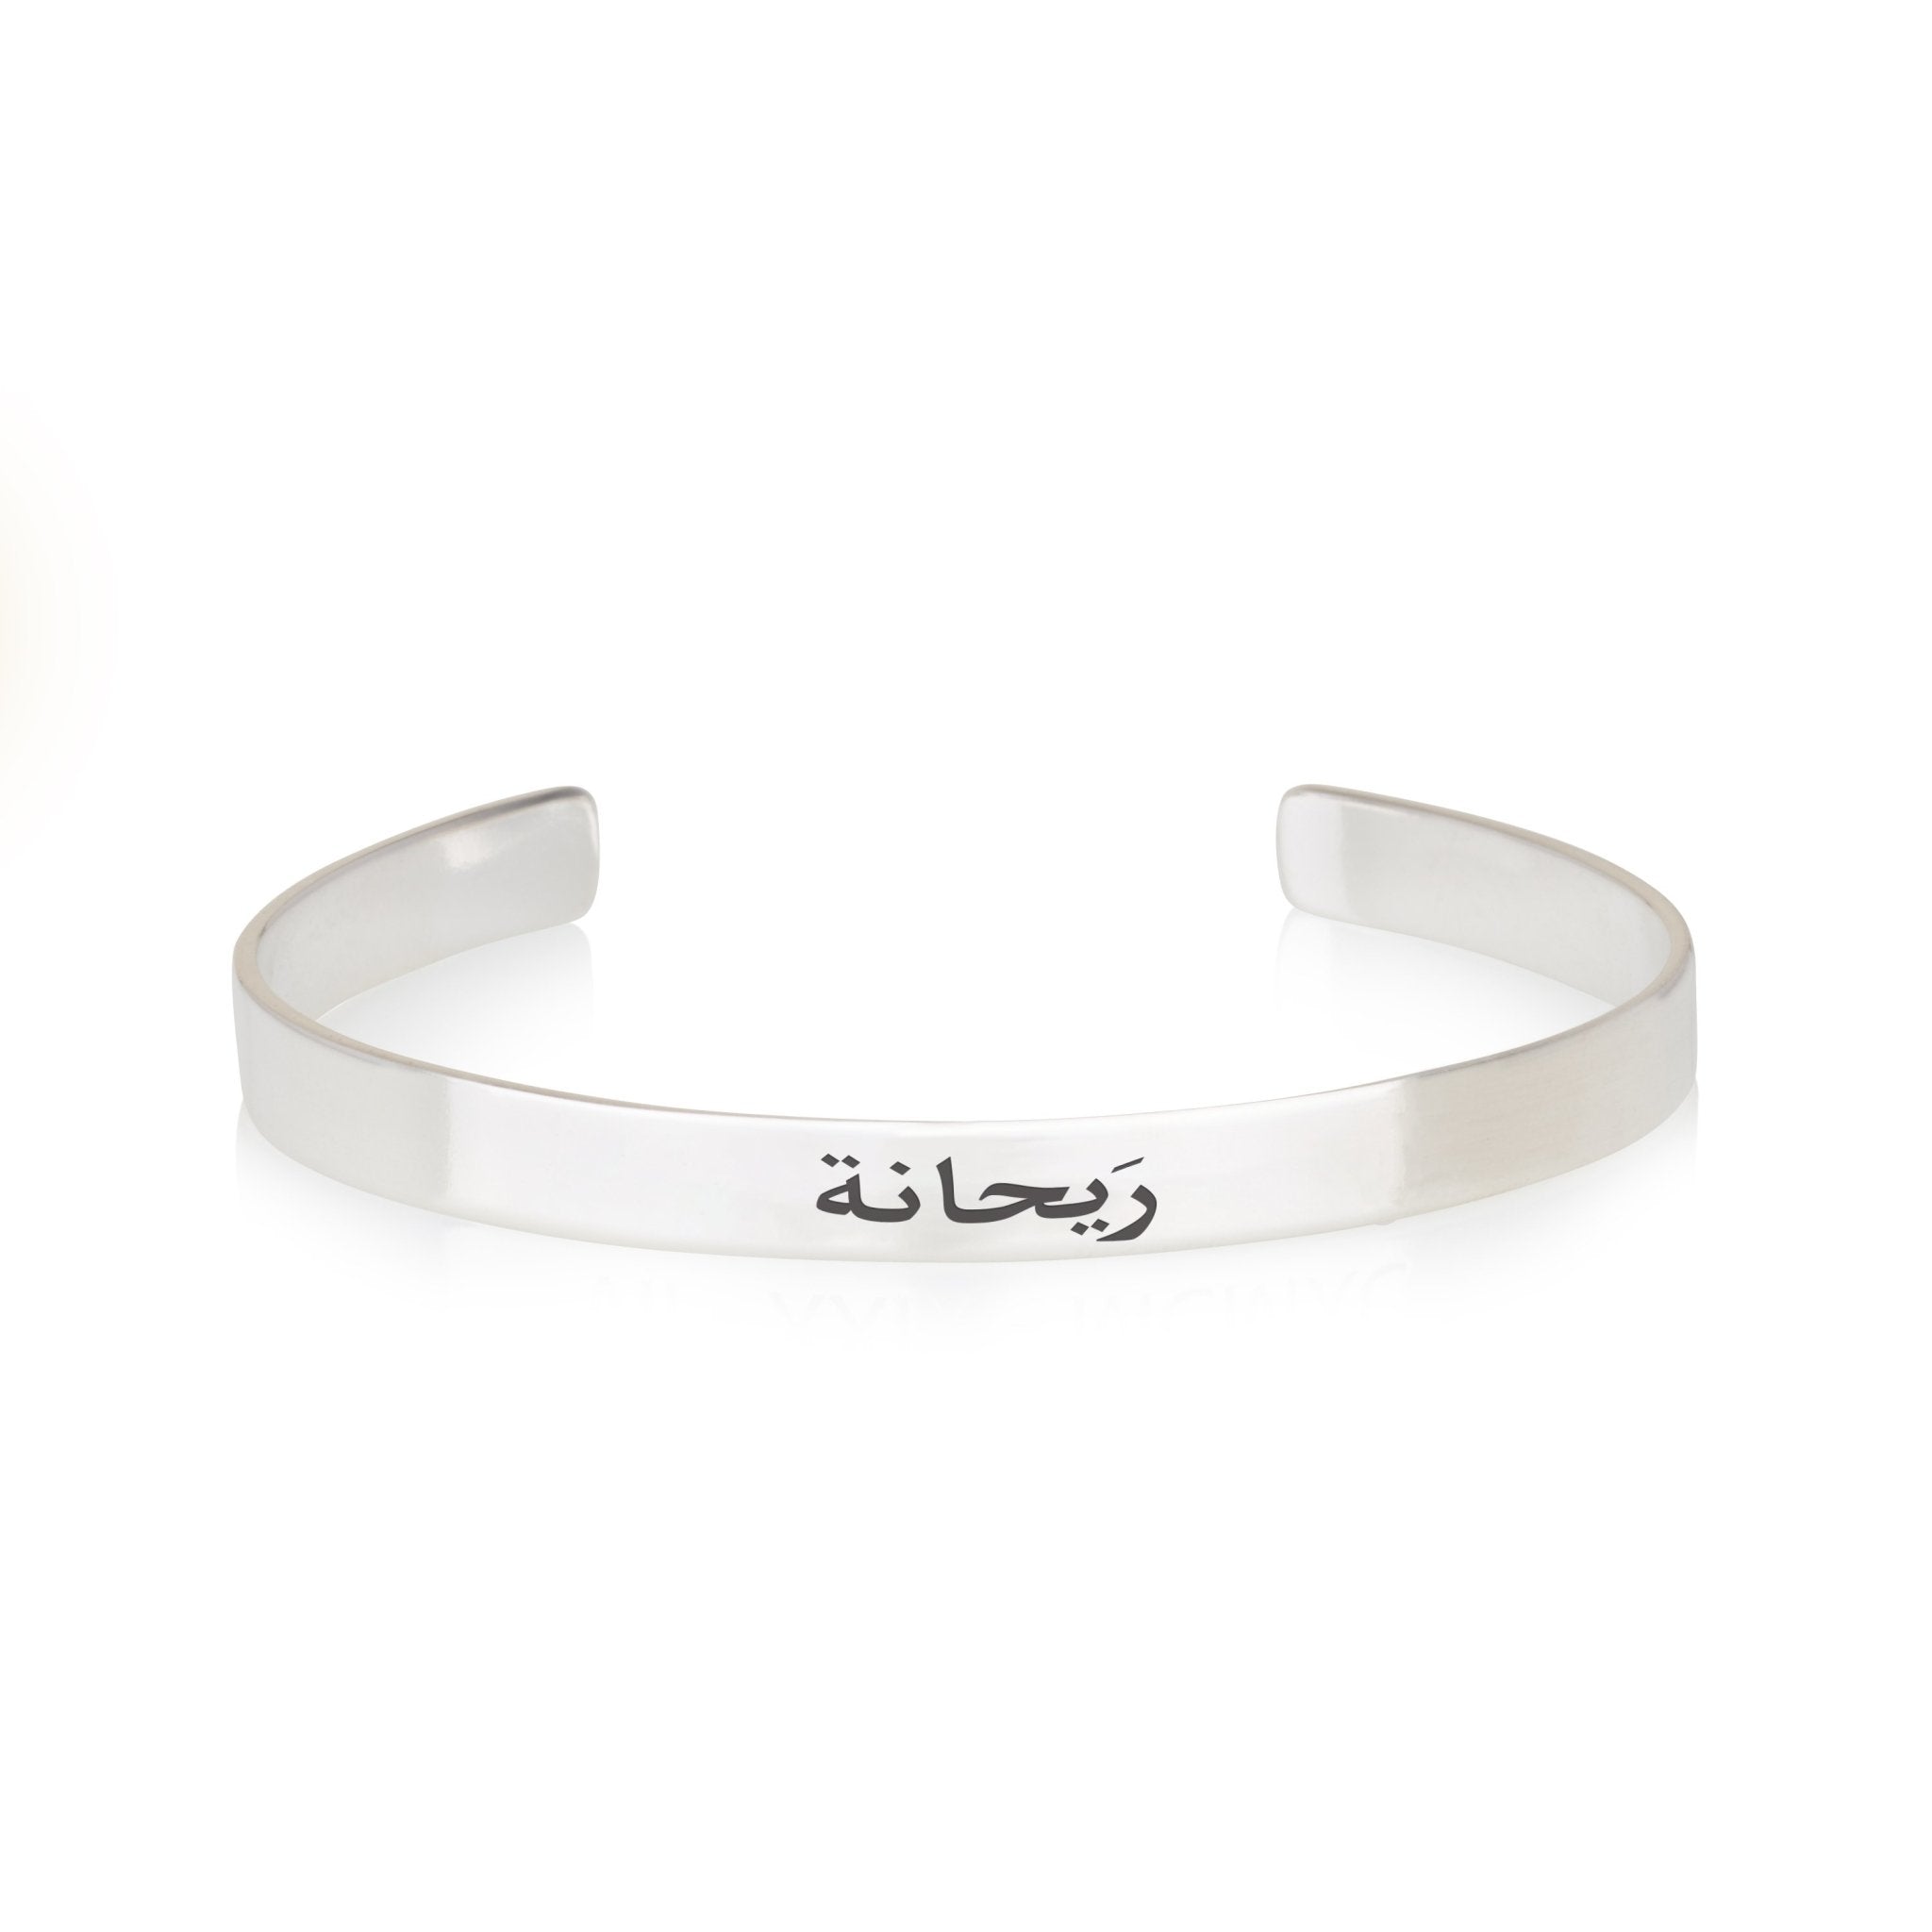 Arabic Bracelet - Personalized Sterling Silver Cuff - Arabic Jewelry -  Nadin Art Design - Personalized Jewelry